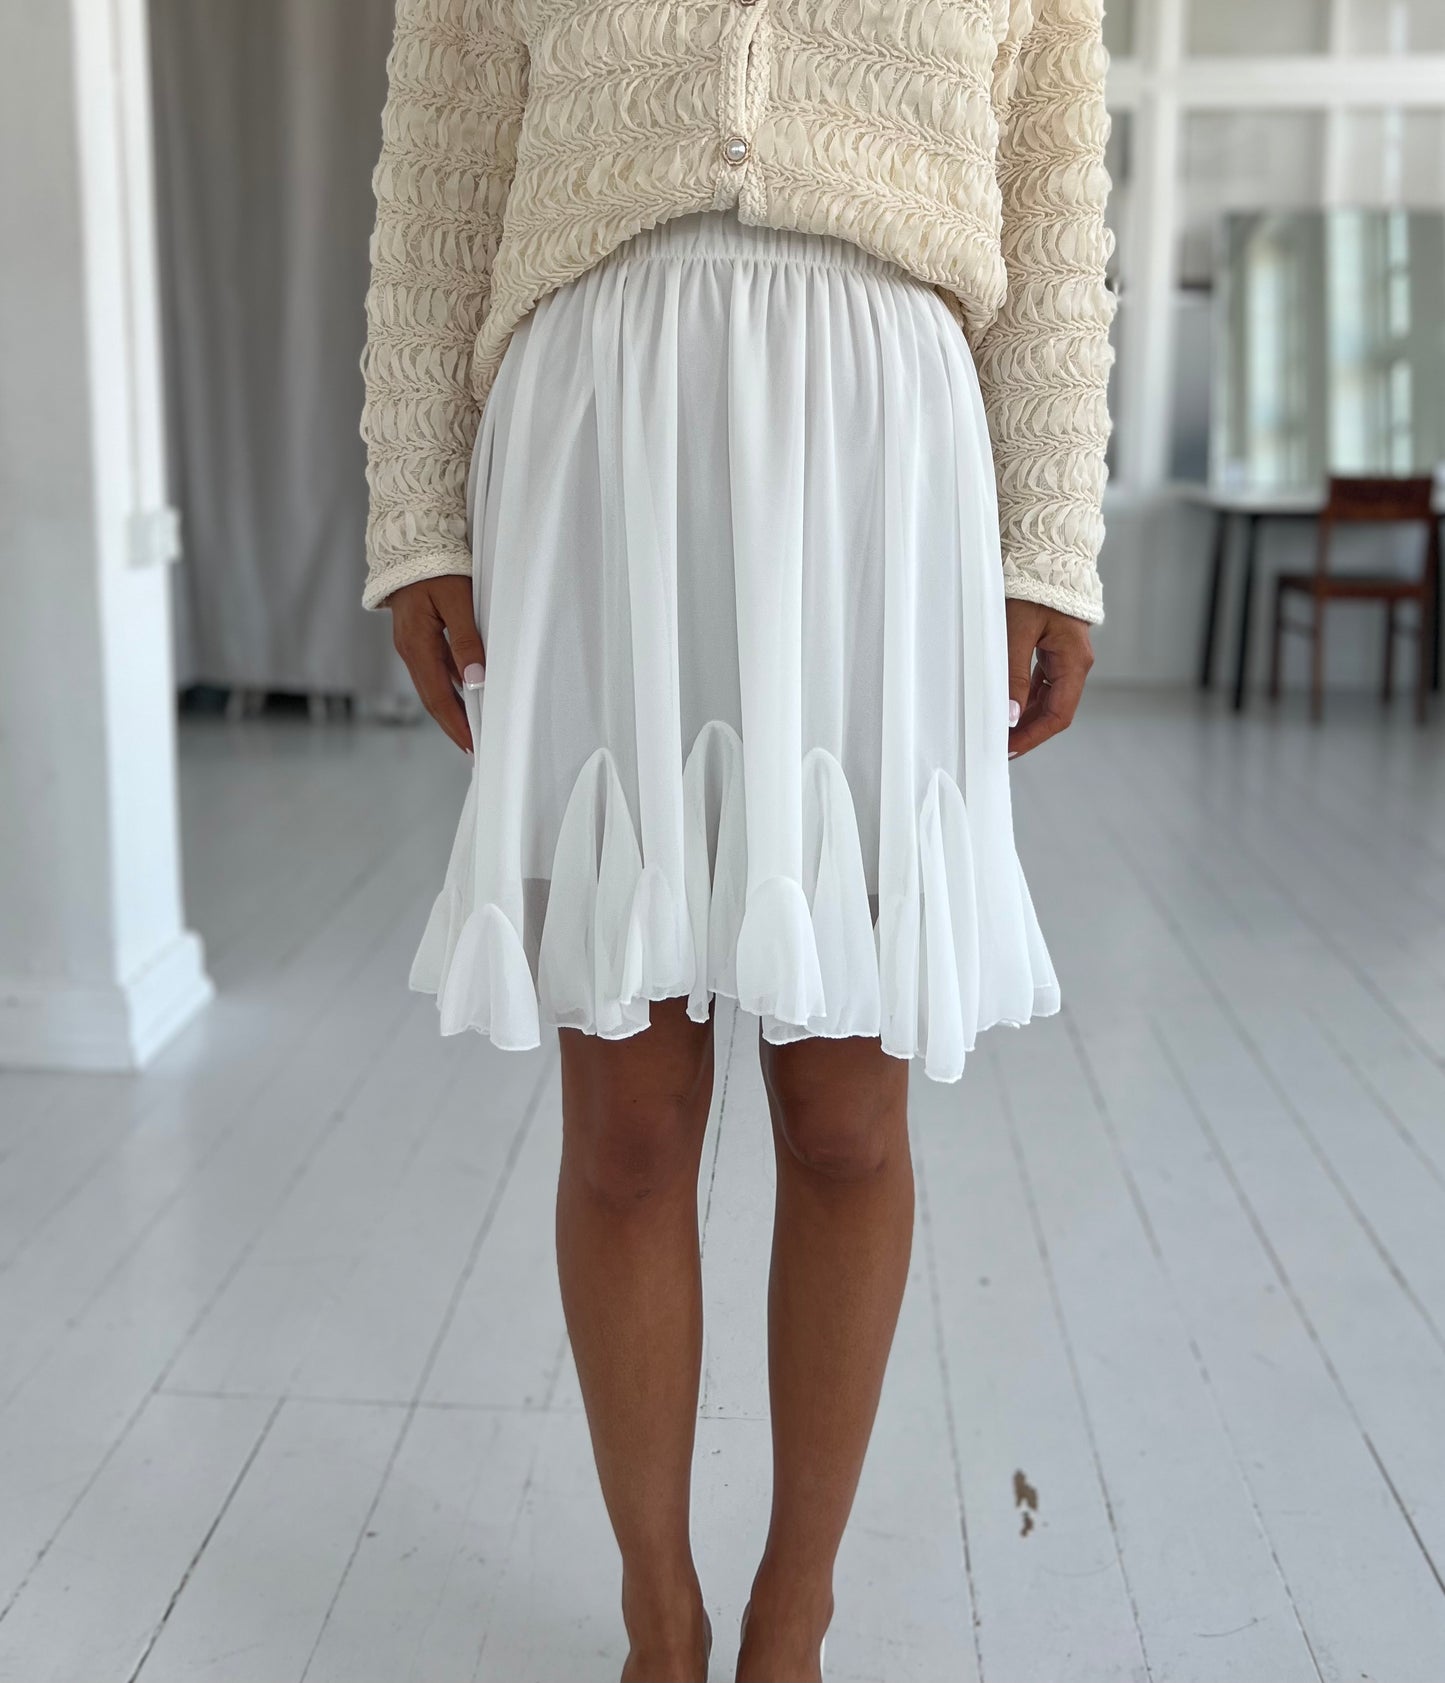 Schilo-Jolie white skirt (6356)